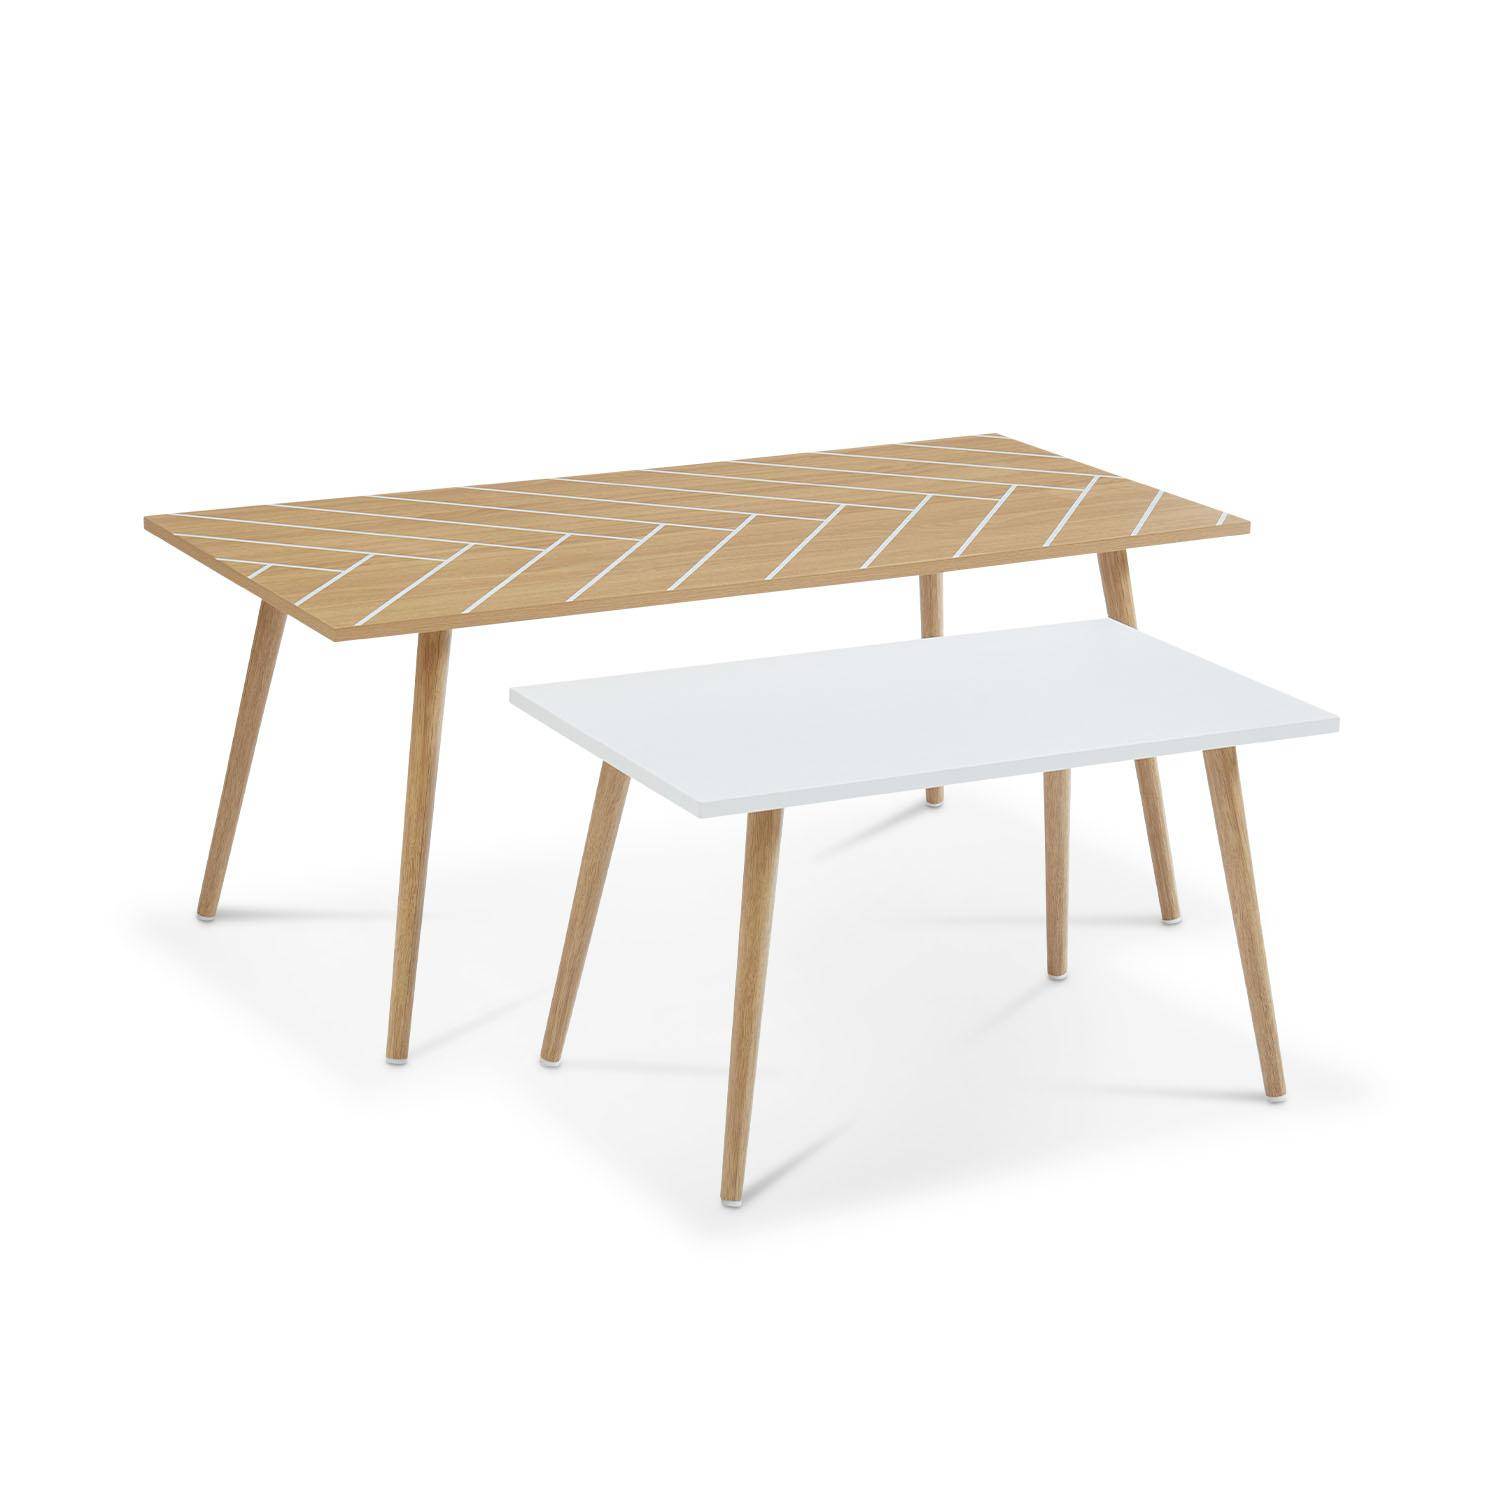 Conjunto de 2 mesas de centro natural y blanco - 110x50x45,5cm y 70x40x39cm - Etnik - base de madera maciza de eucalipto, diseño escandinavo,sweeek,Photo1